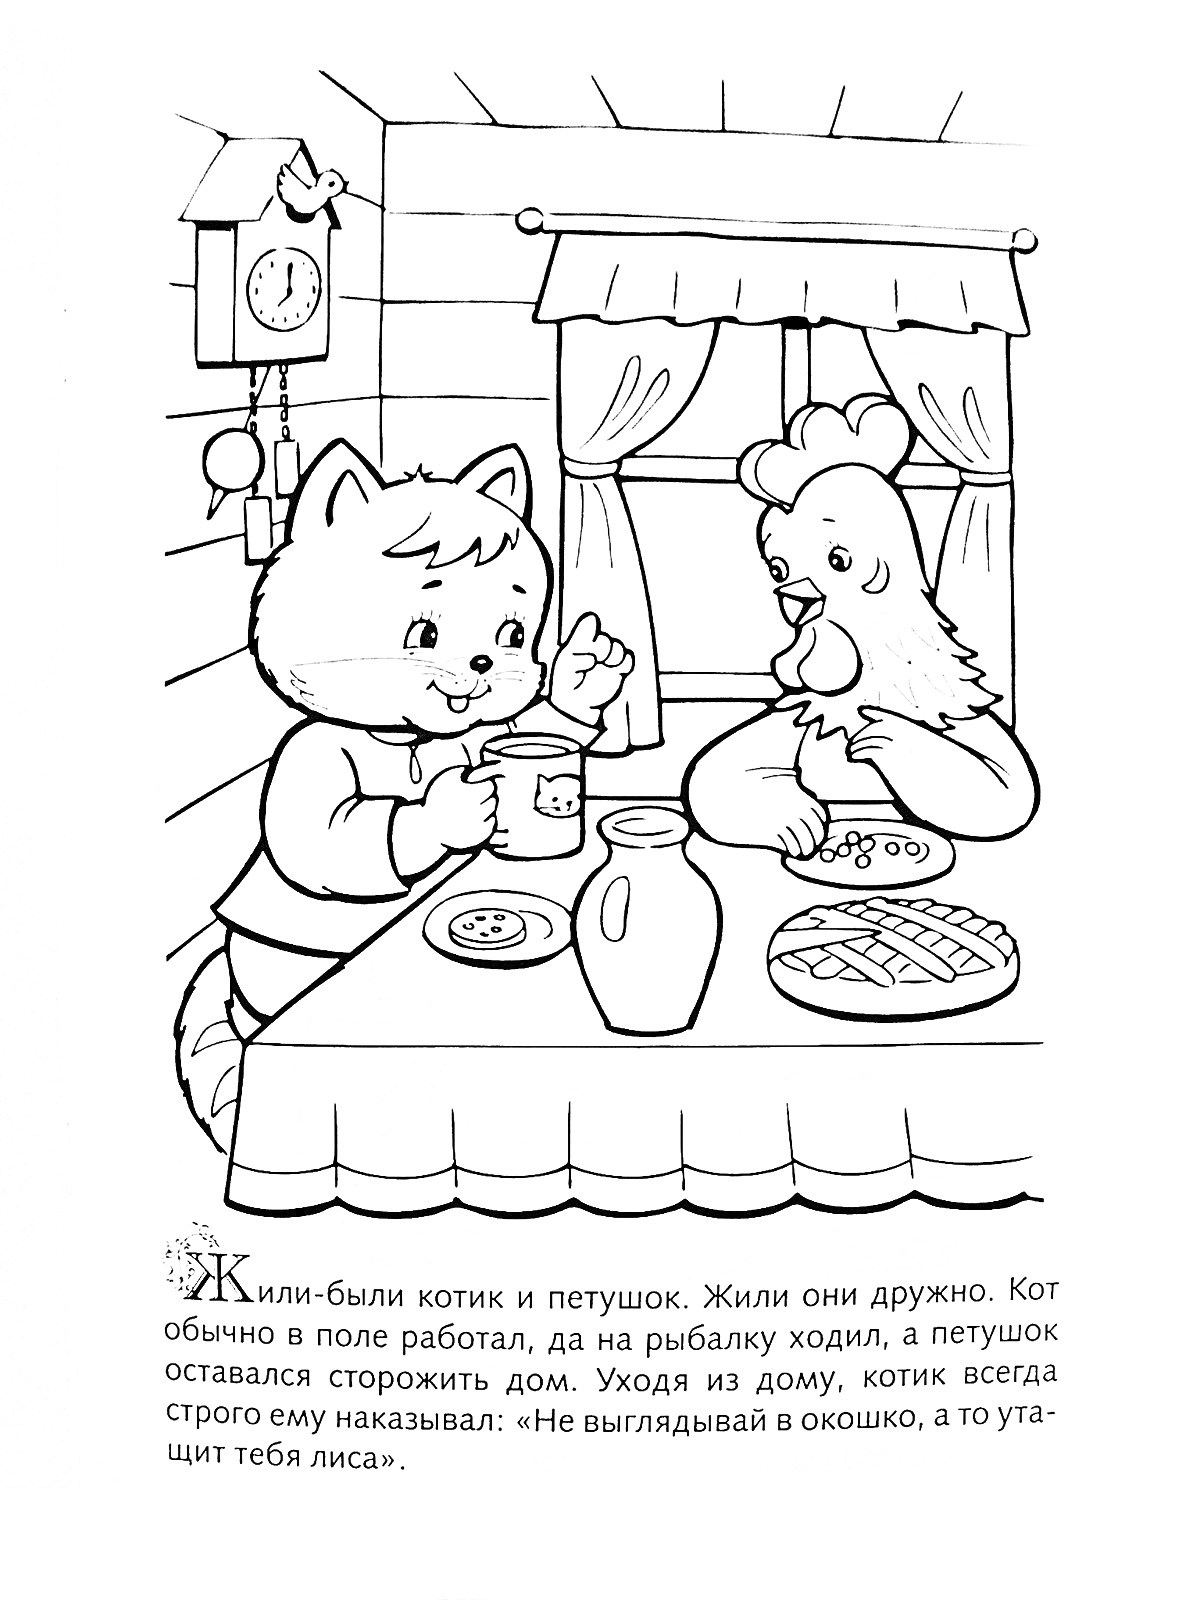 Раскраска Кот и Петух за столом в доме, на столе еда (пирог) и кувшин, окно с занавесками, на стене часы.